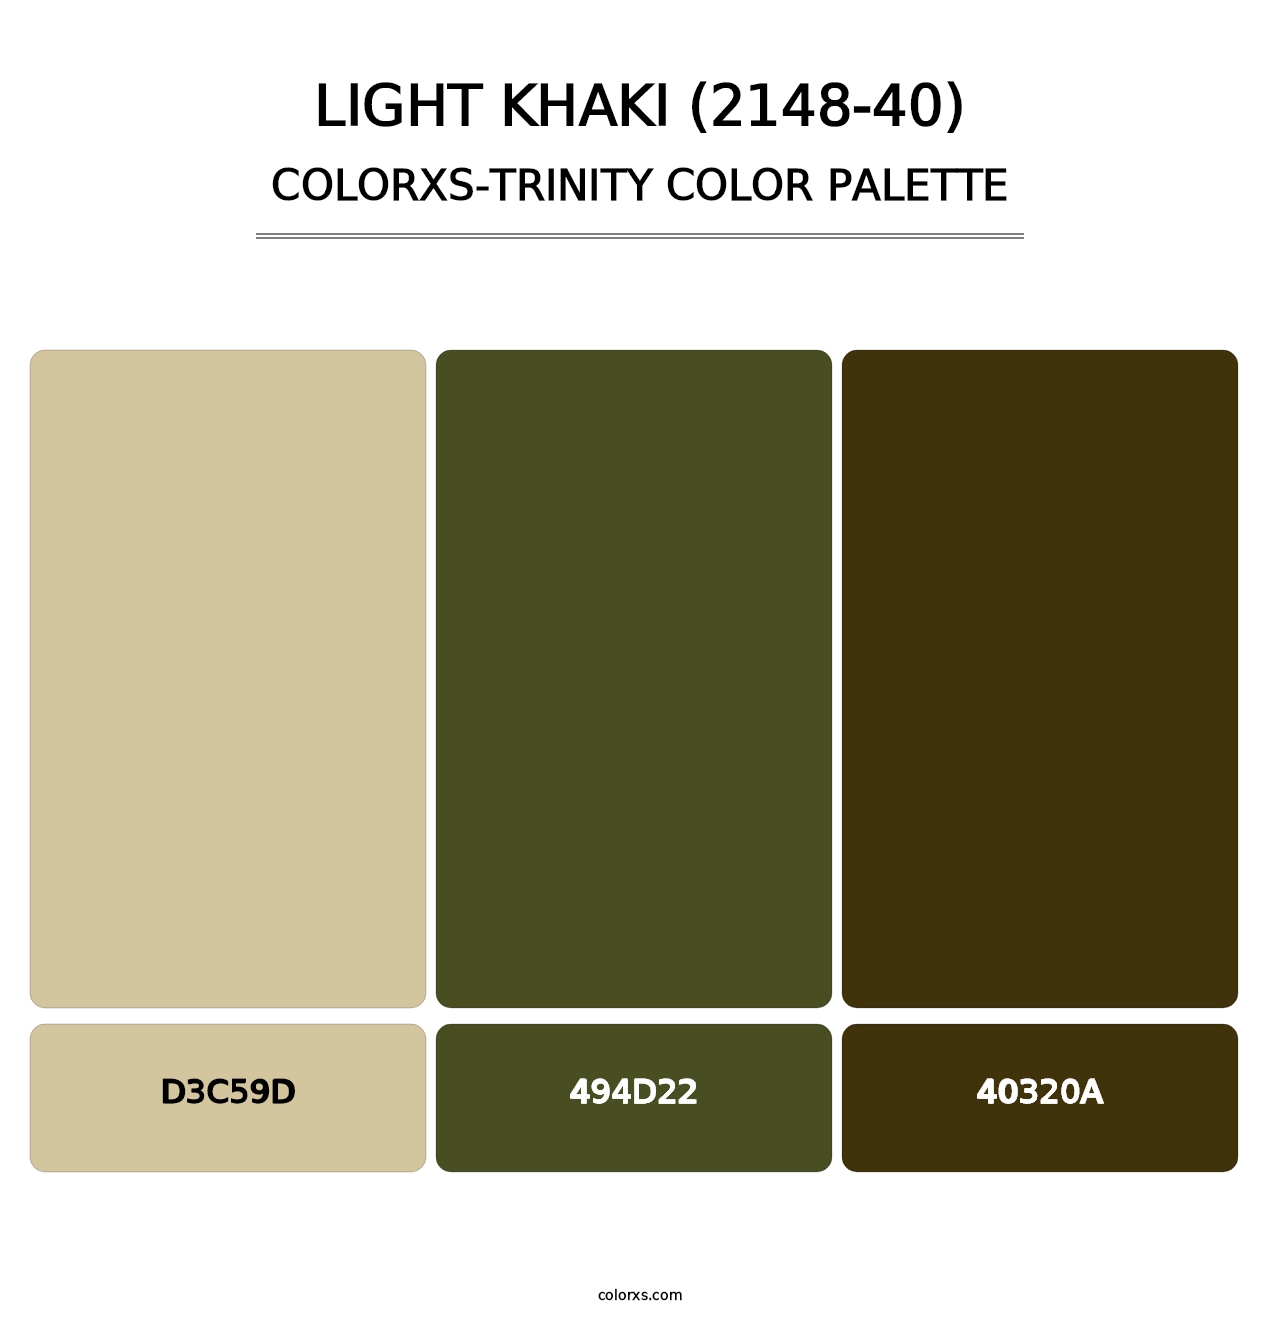 Light Khaki (2148-40) - Colorxs Trinity Palette